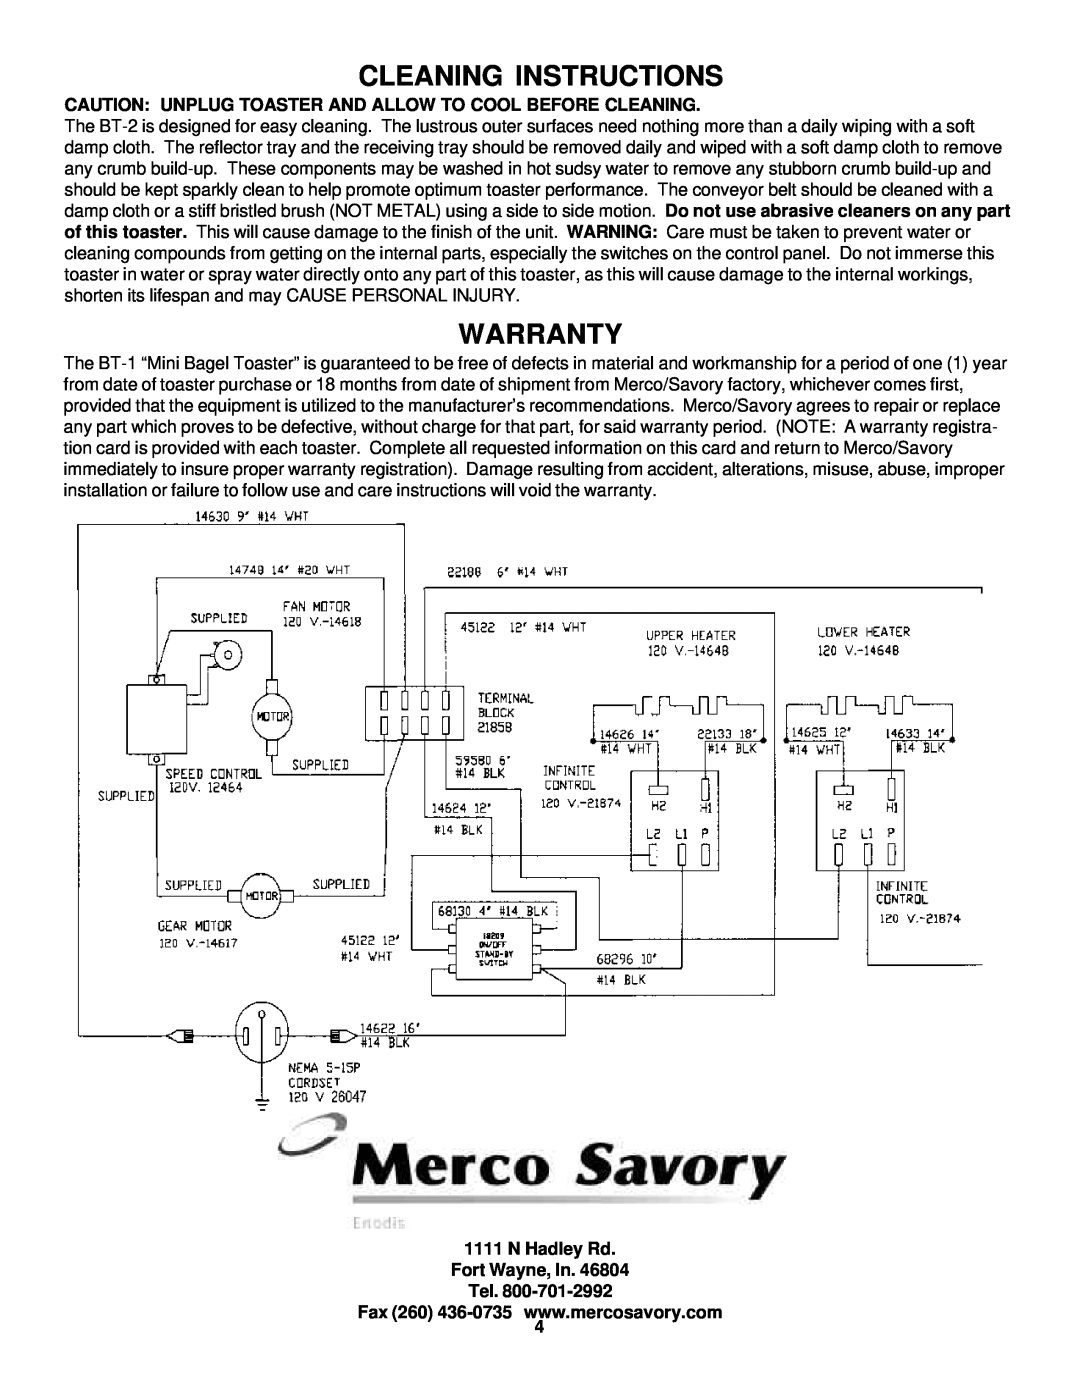 Merco Savory BT-1 operation manual Cleaning Instructions, Warranty, N Hadley Rd Fort Wayne, In. Tel 